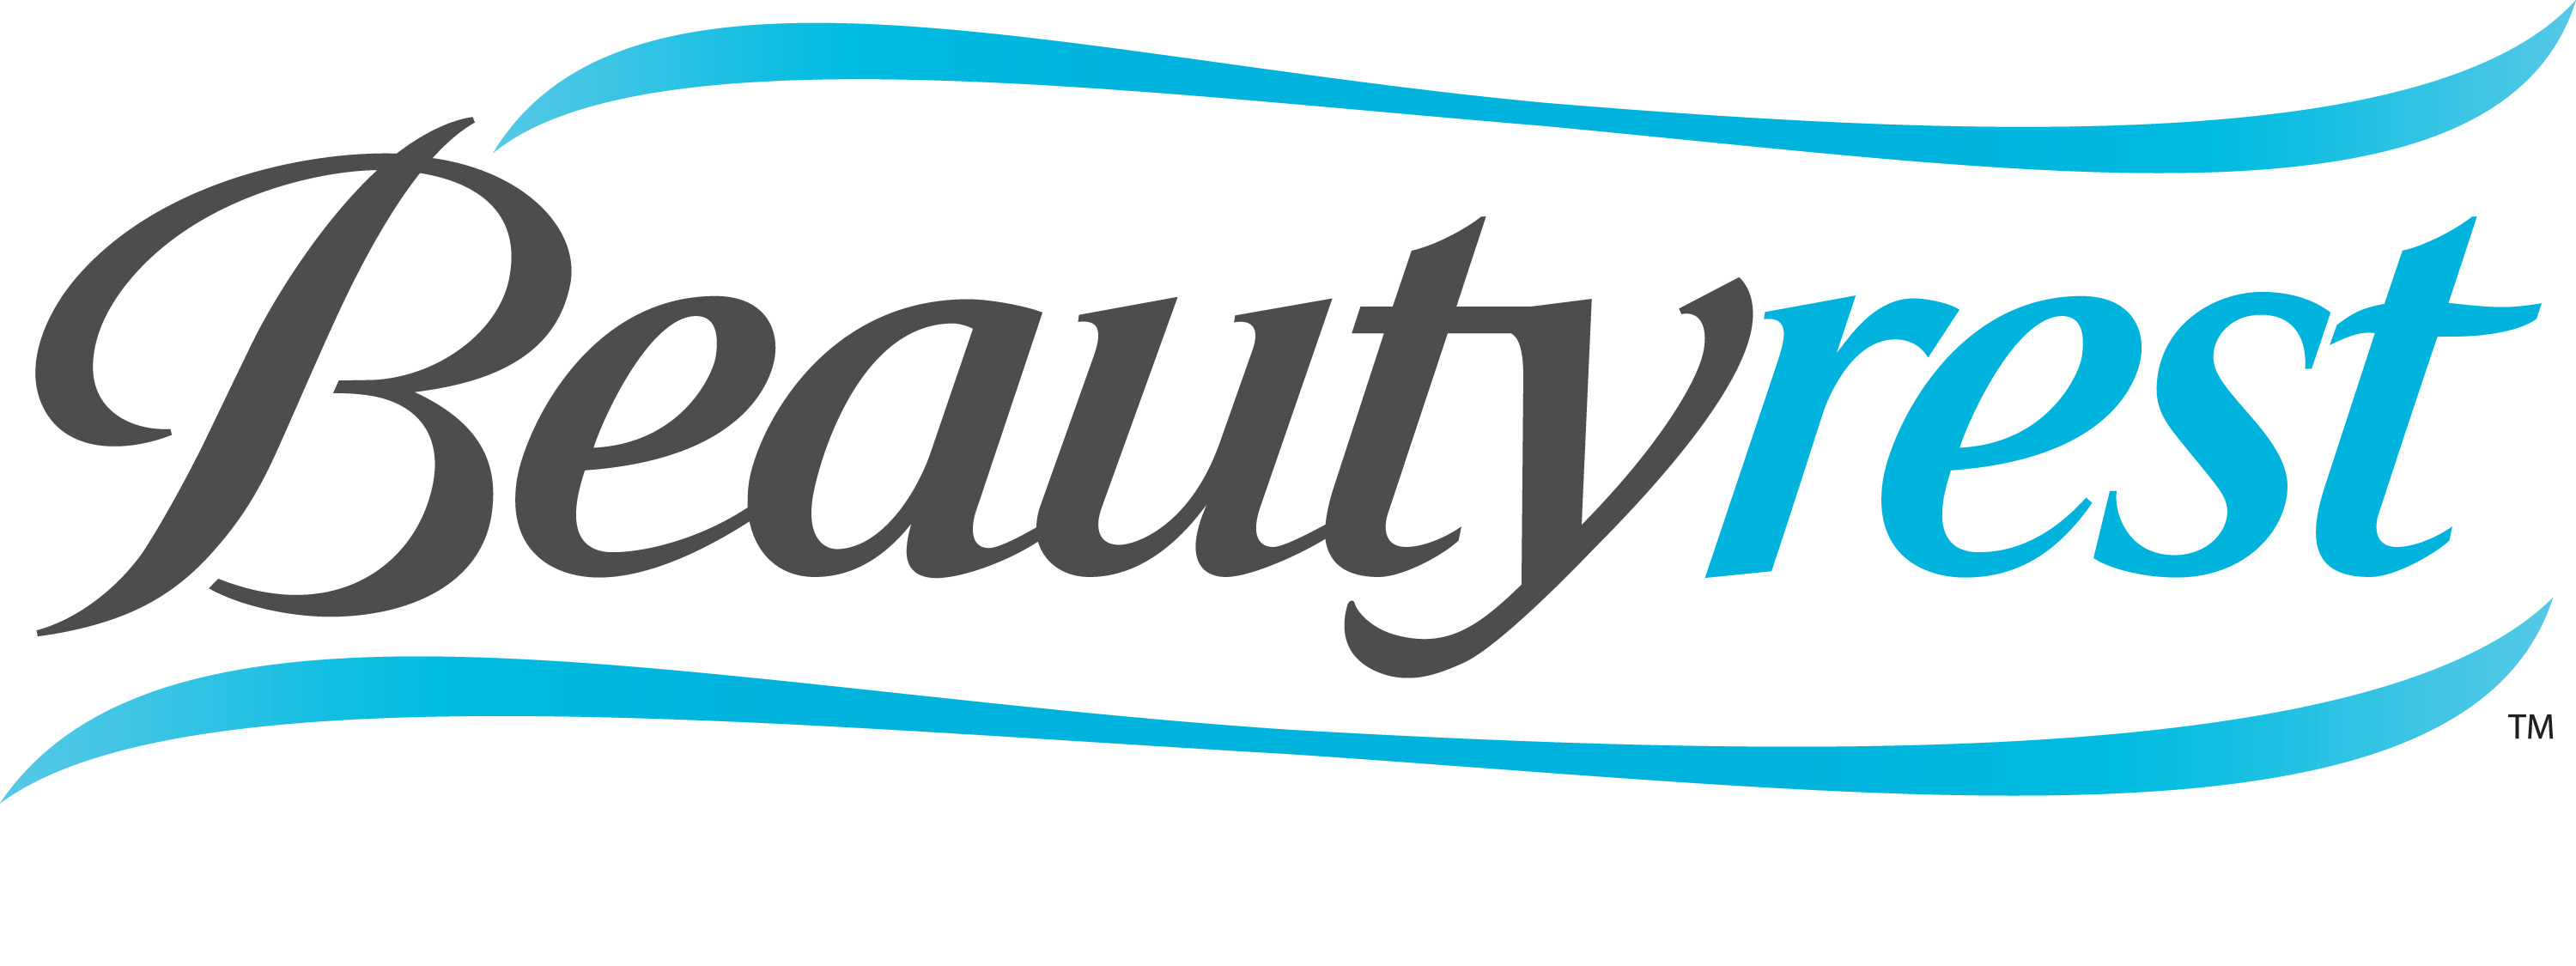 Beautyrest Logo photo - 1